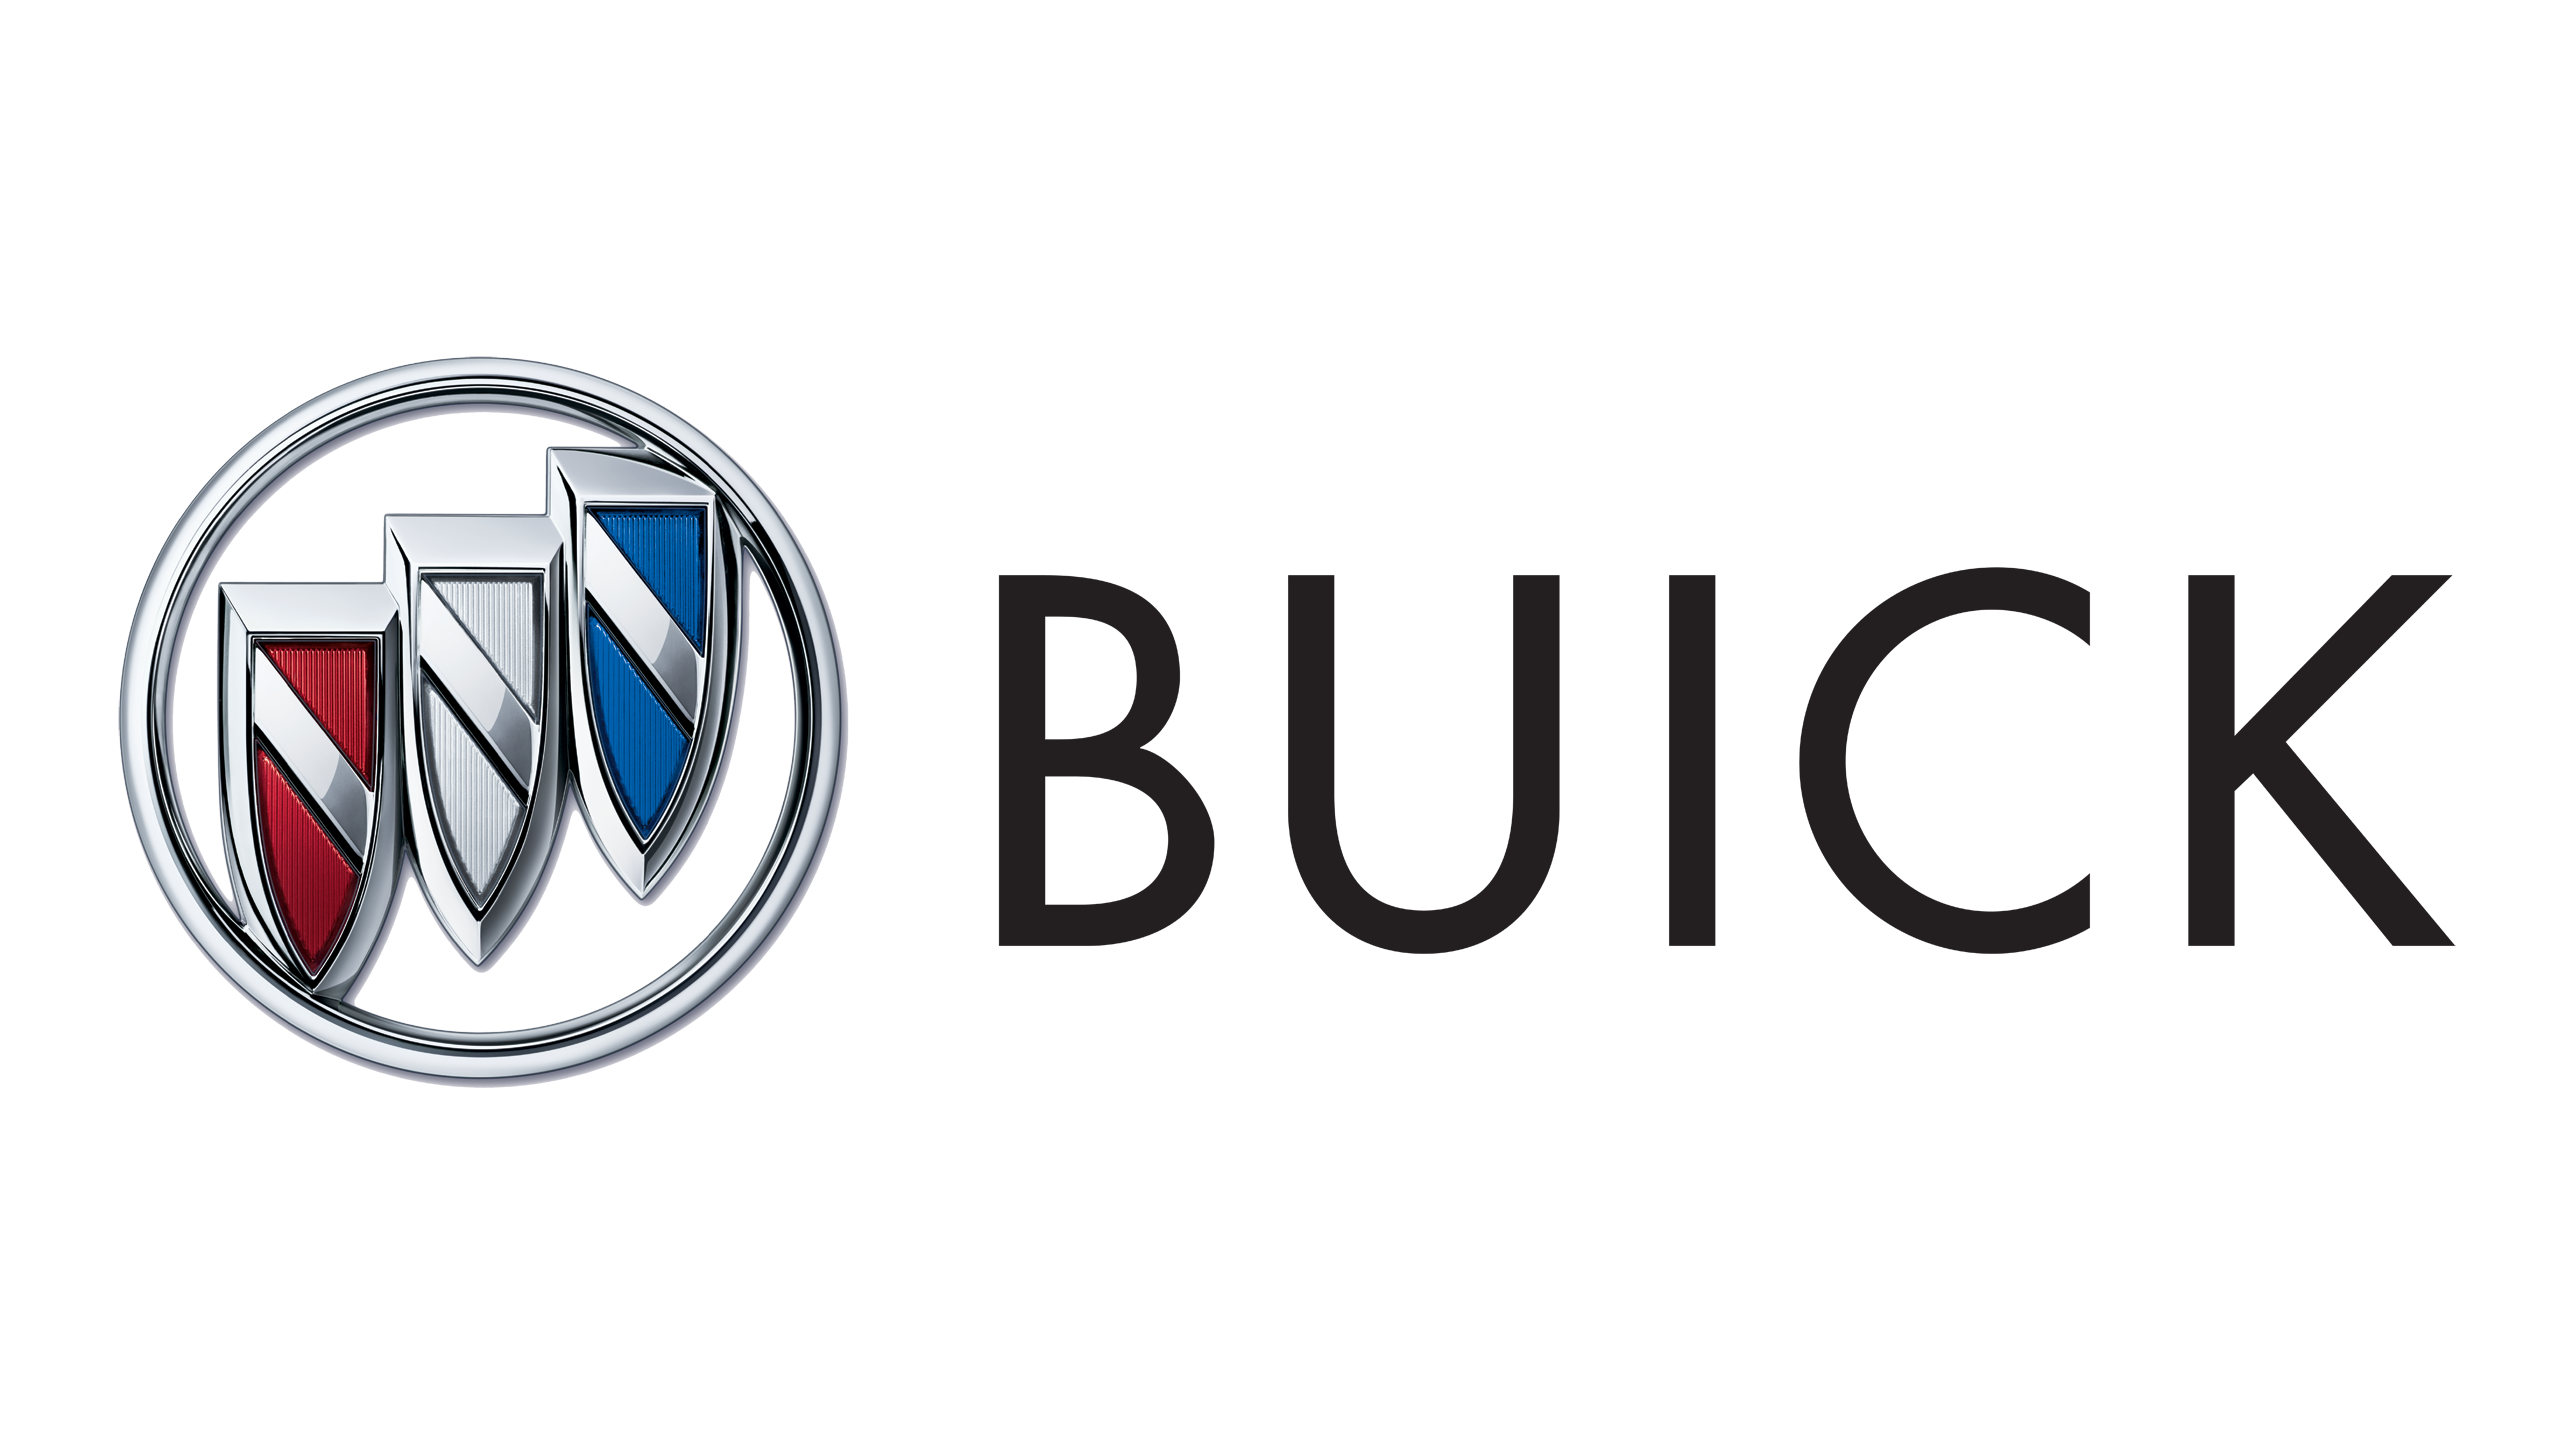 Buick-logo-2002-2560x1440